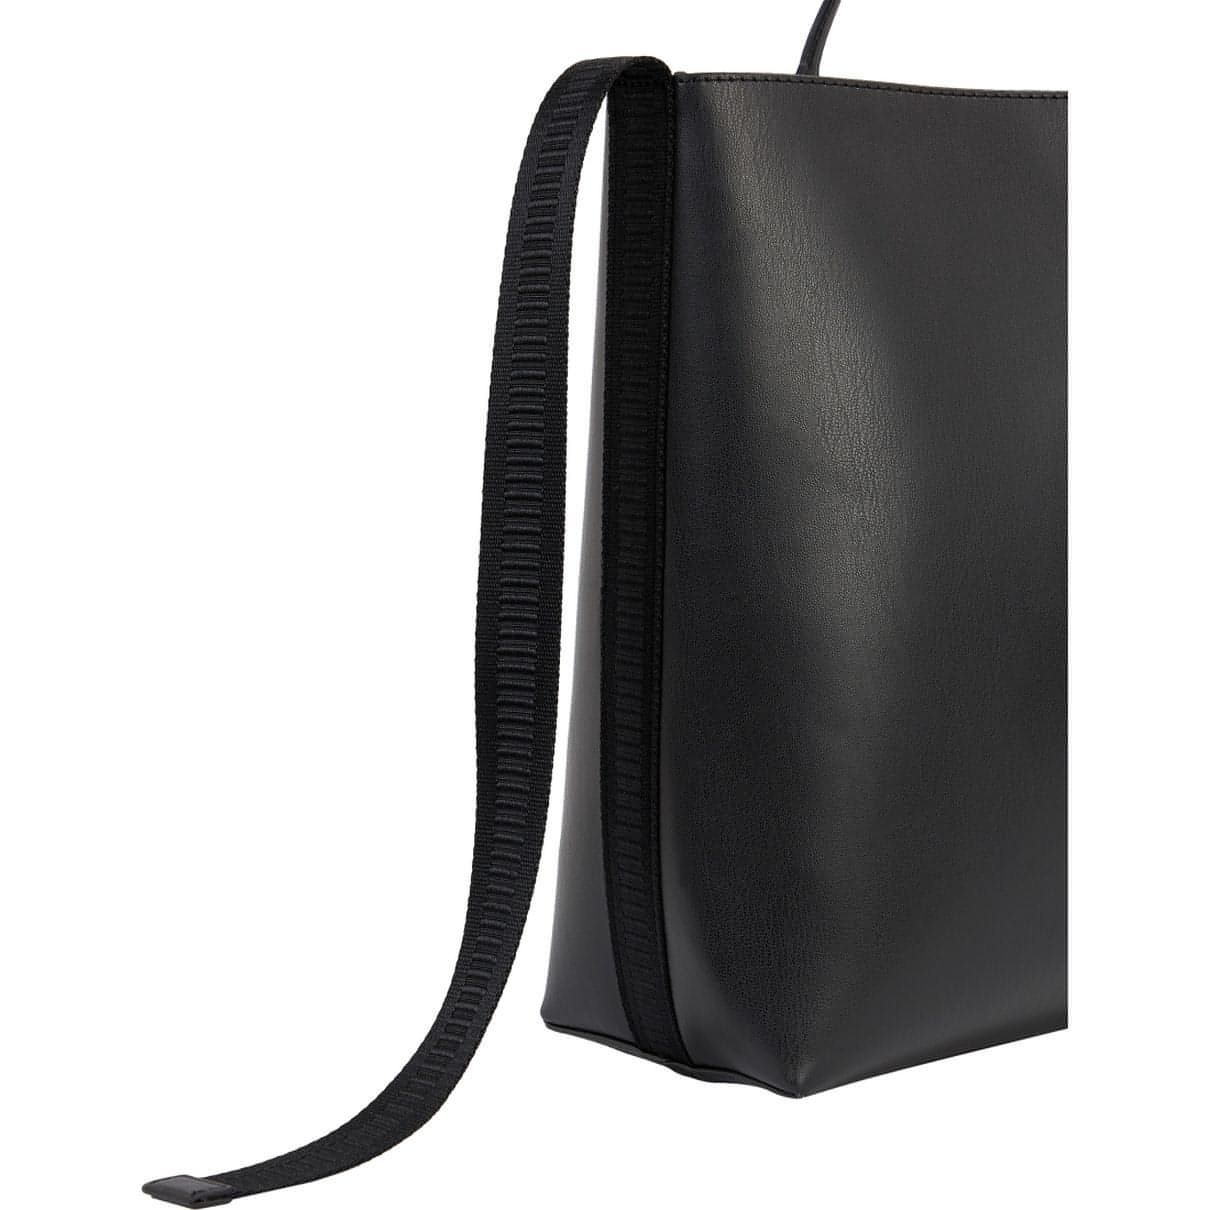 TOMMY HILFIGER moteriškas juodas krepšys Iconic tote